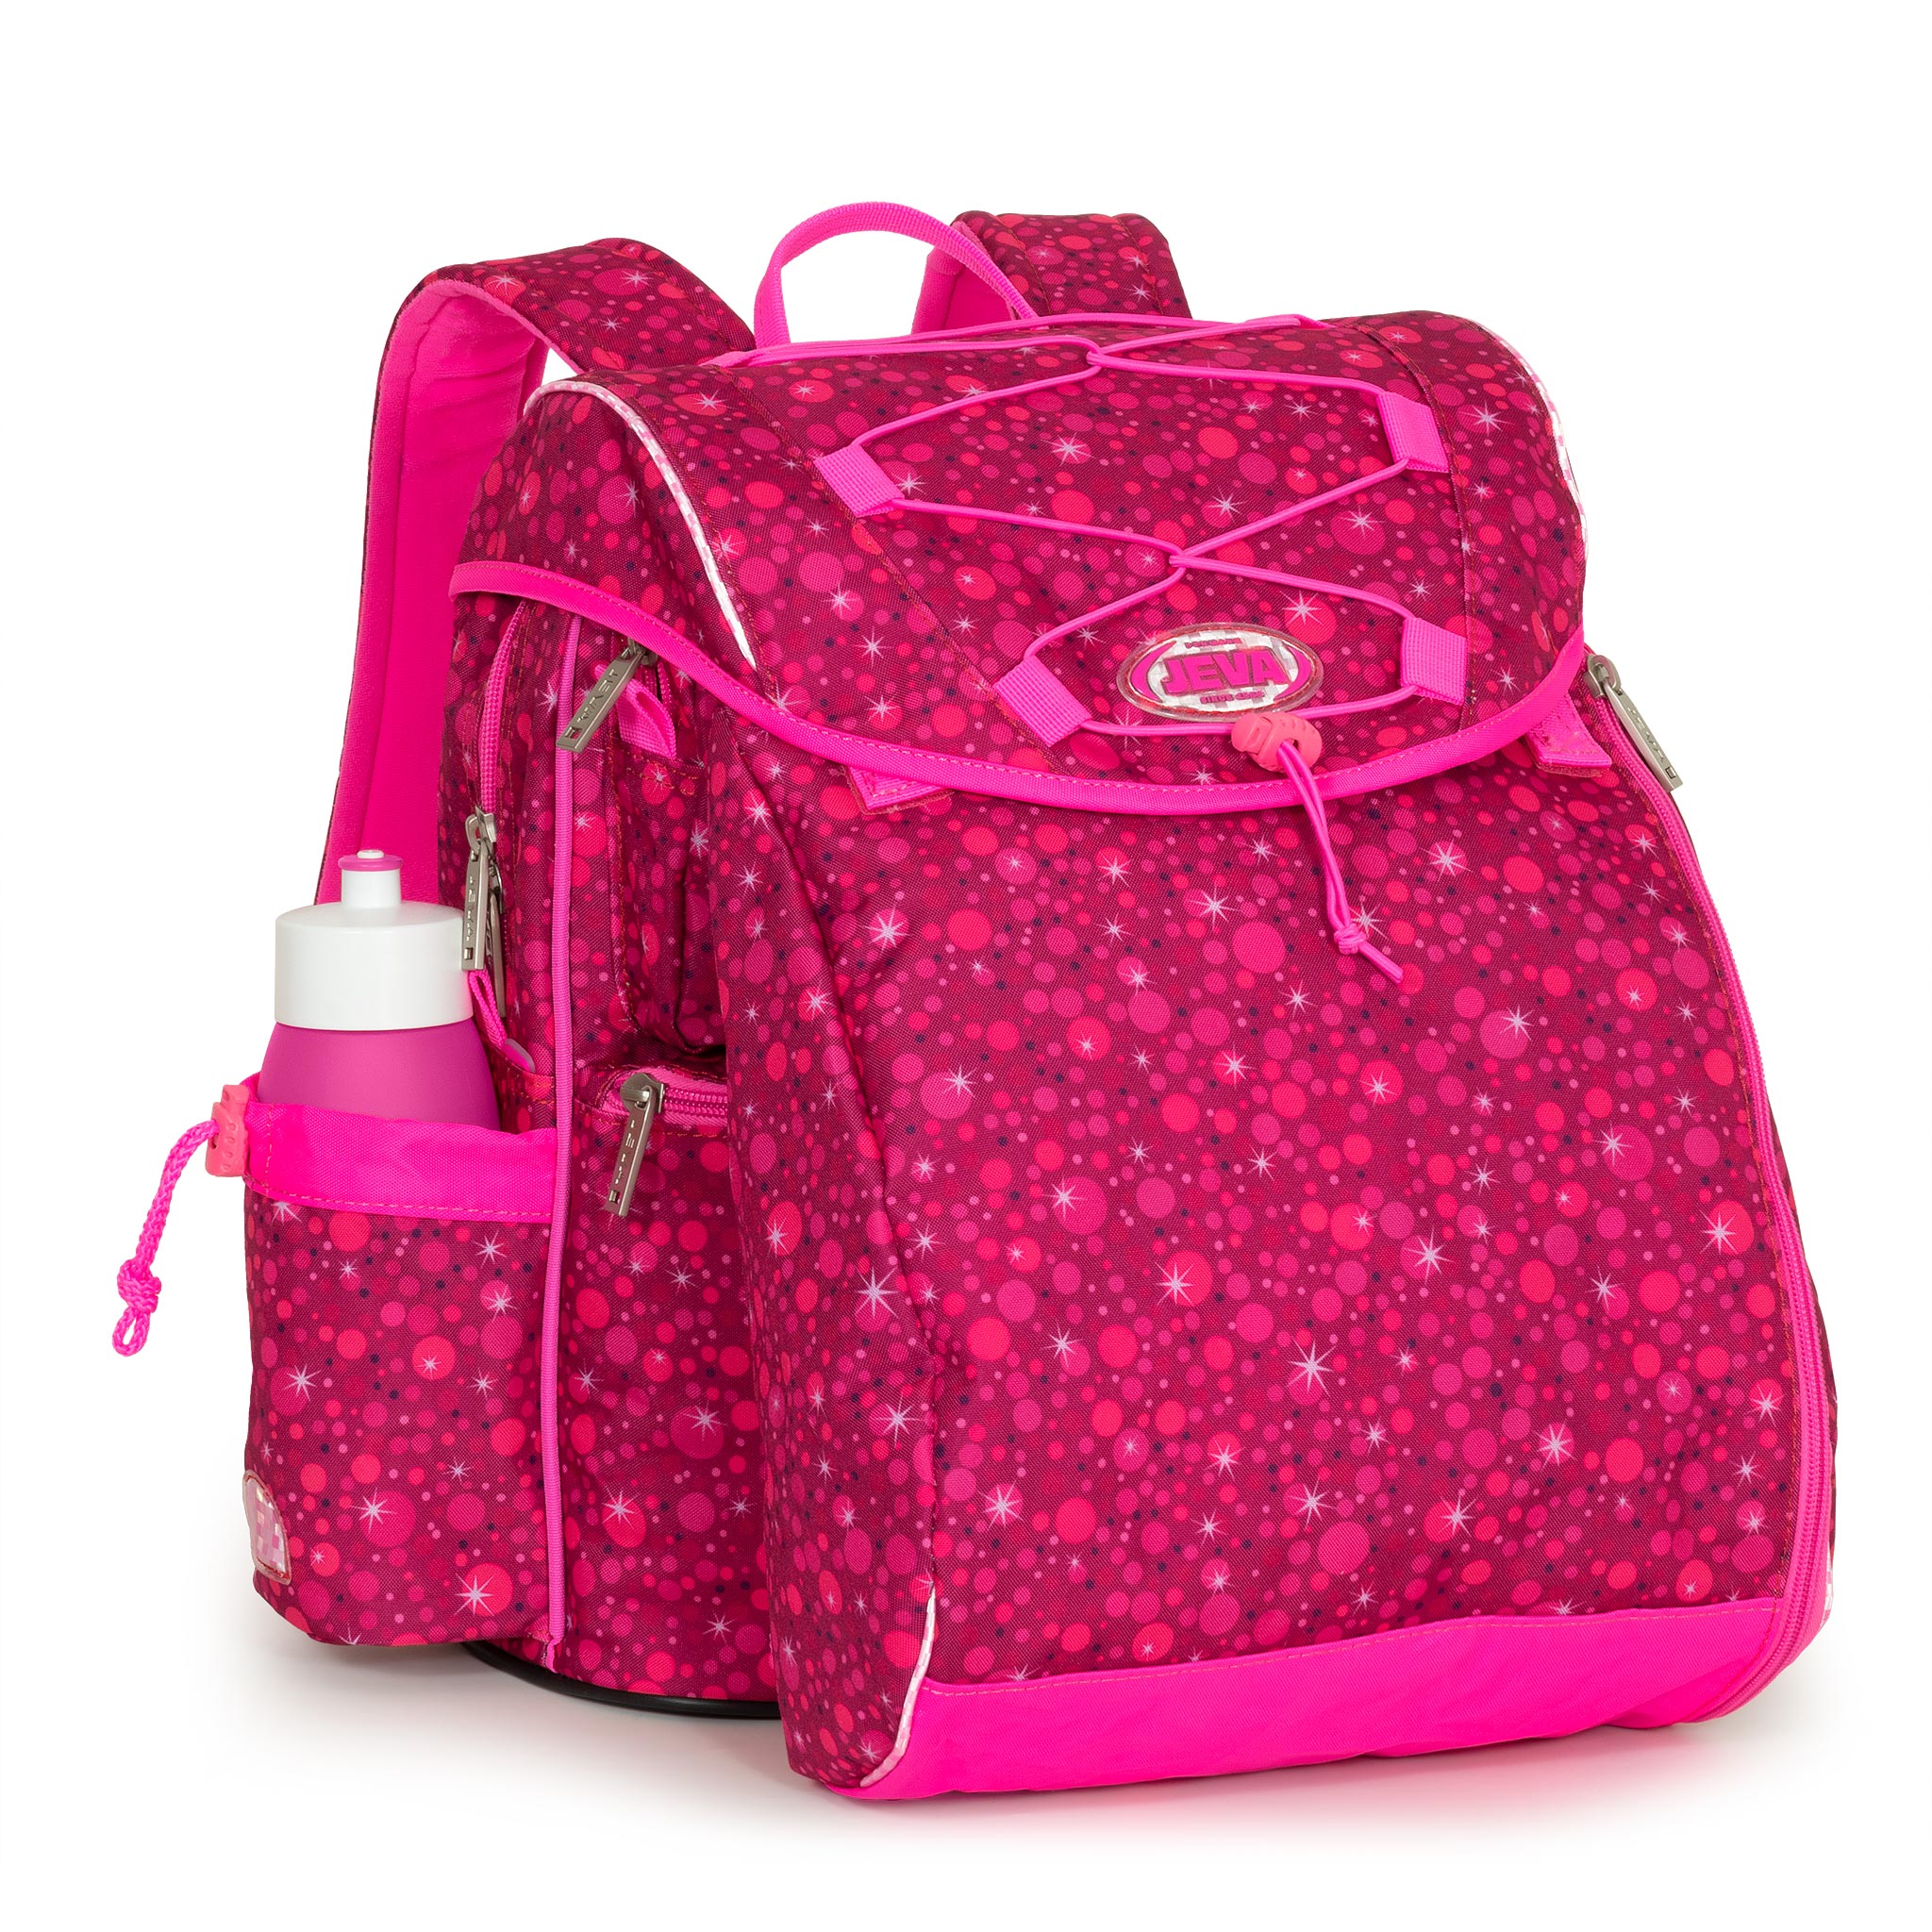 JEVA - Intermediate Backpack- Super Pink (308-06)